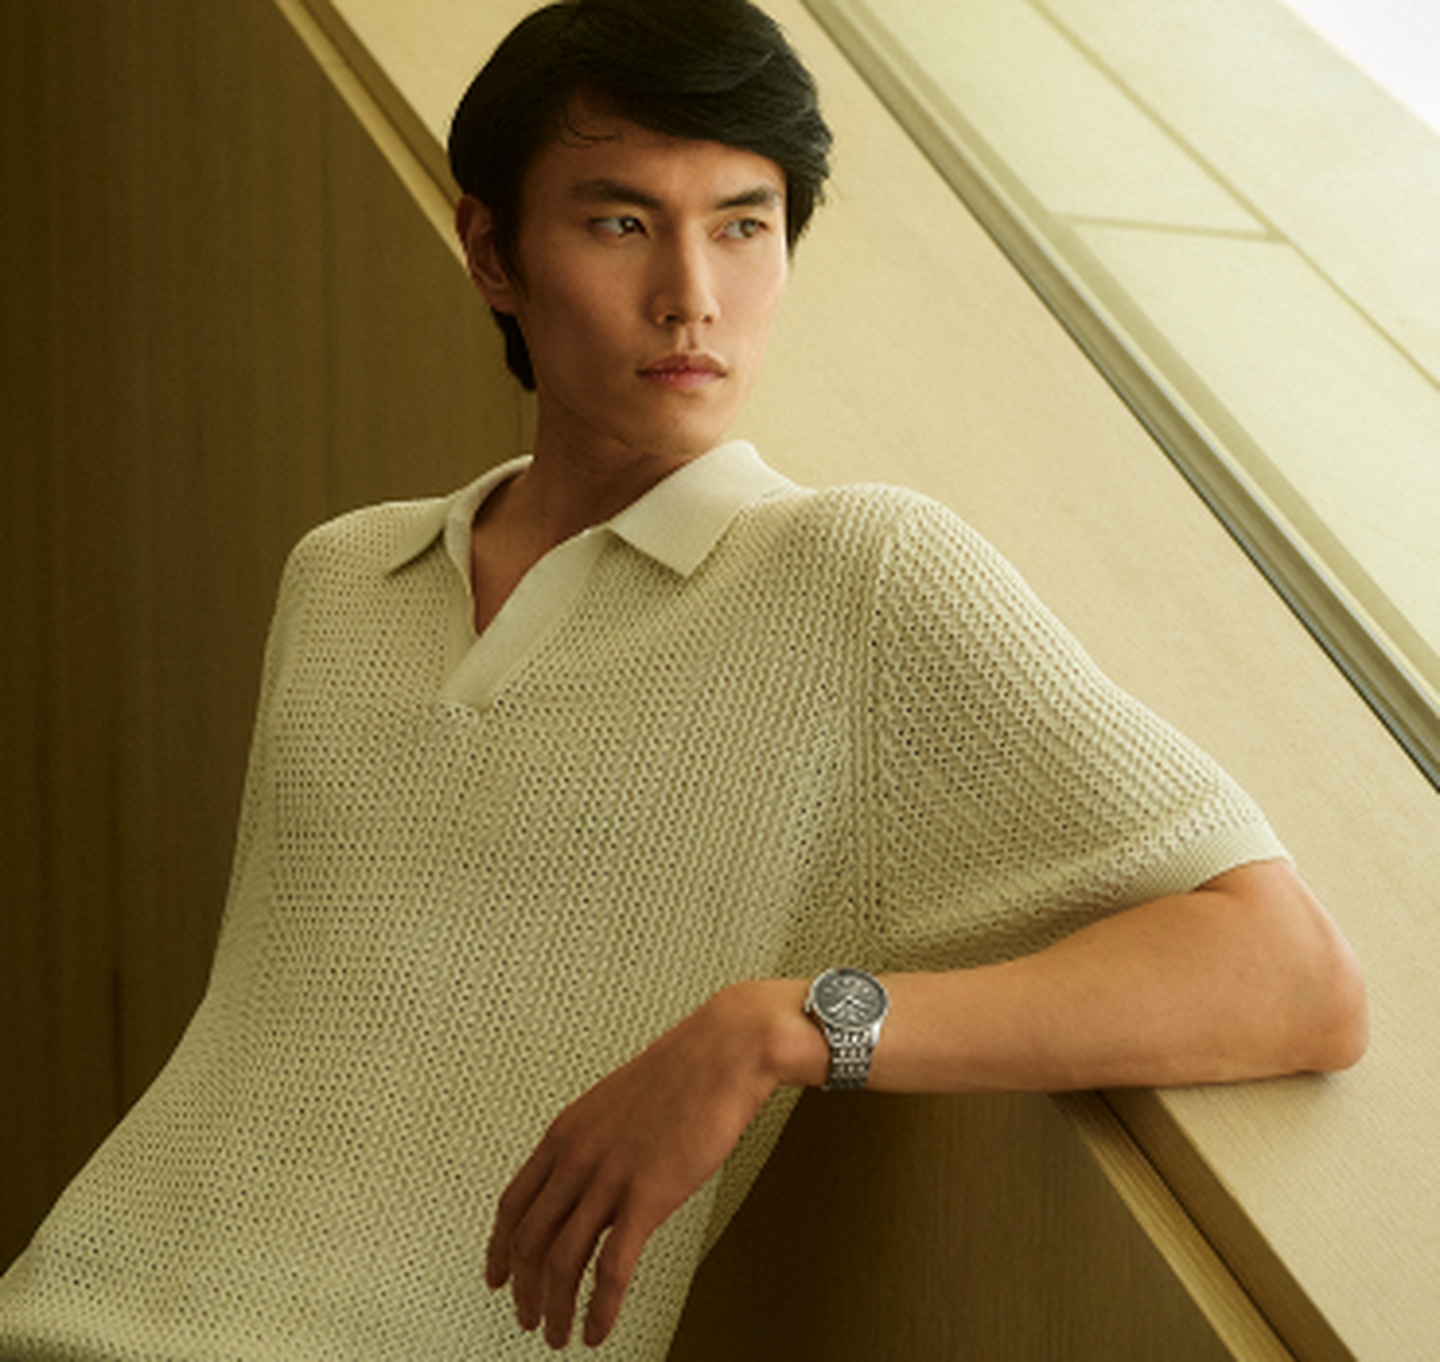 A men's Breitling watch on a male model